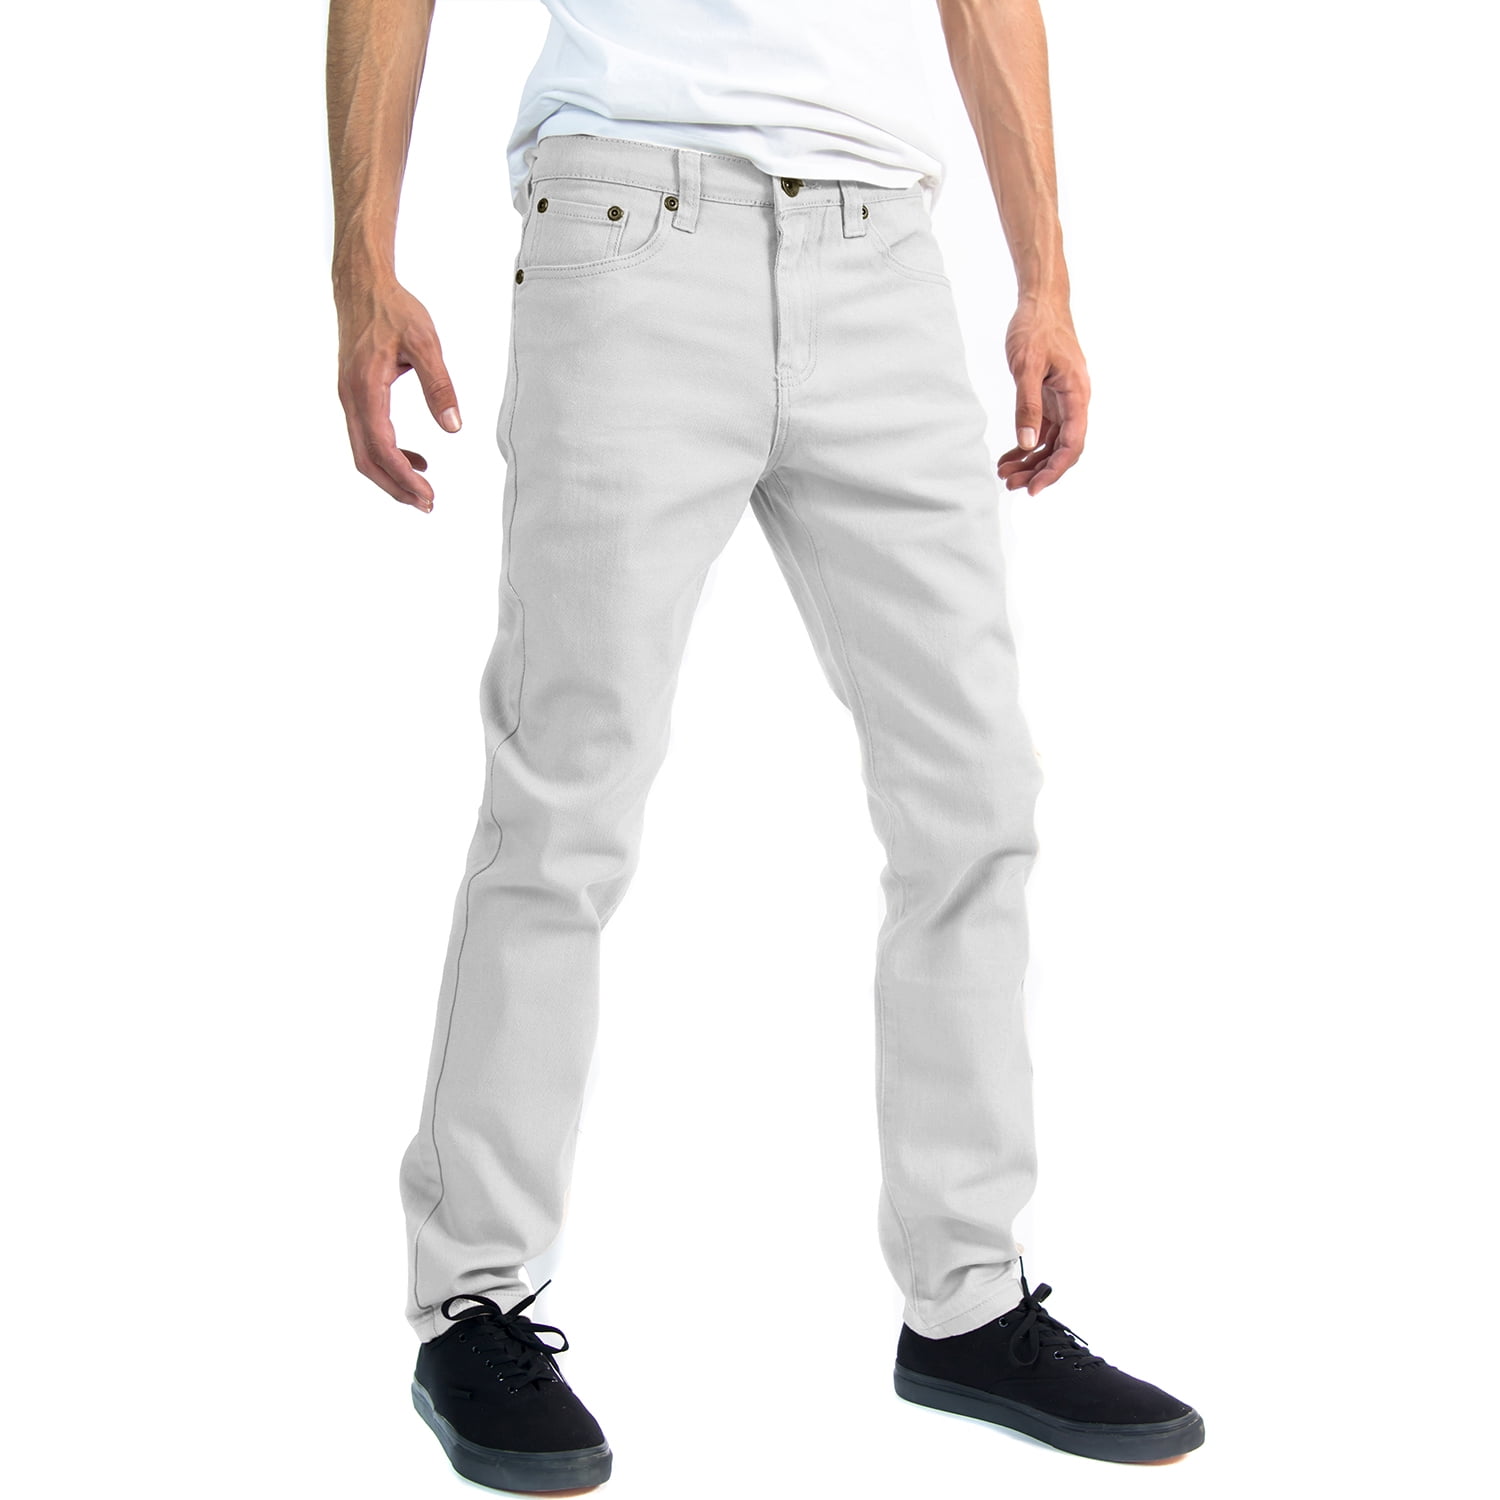 Men's Skinny Jeans - White - 32